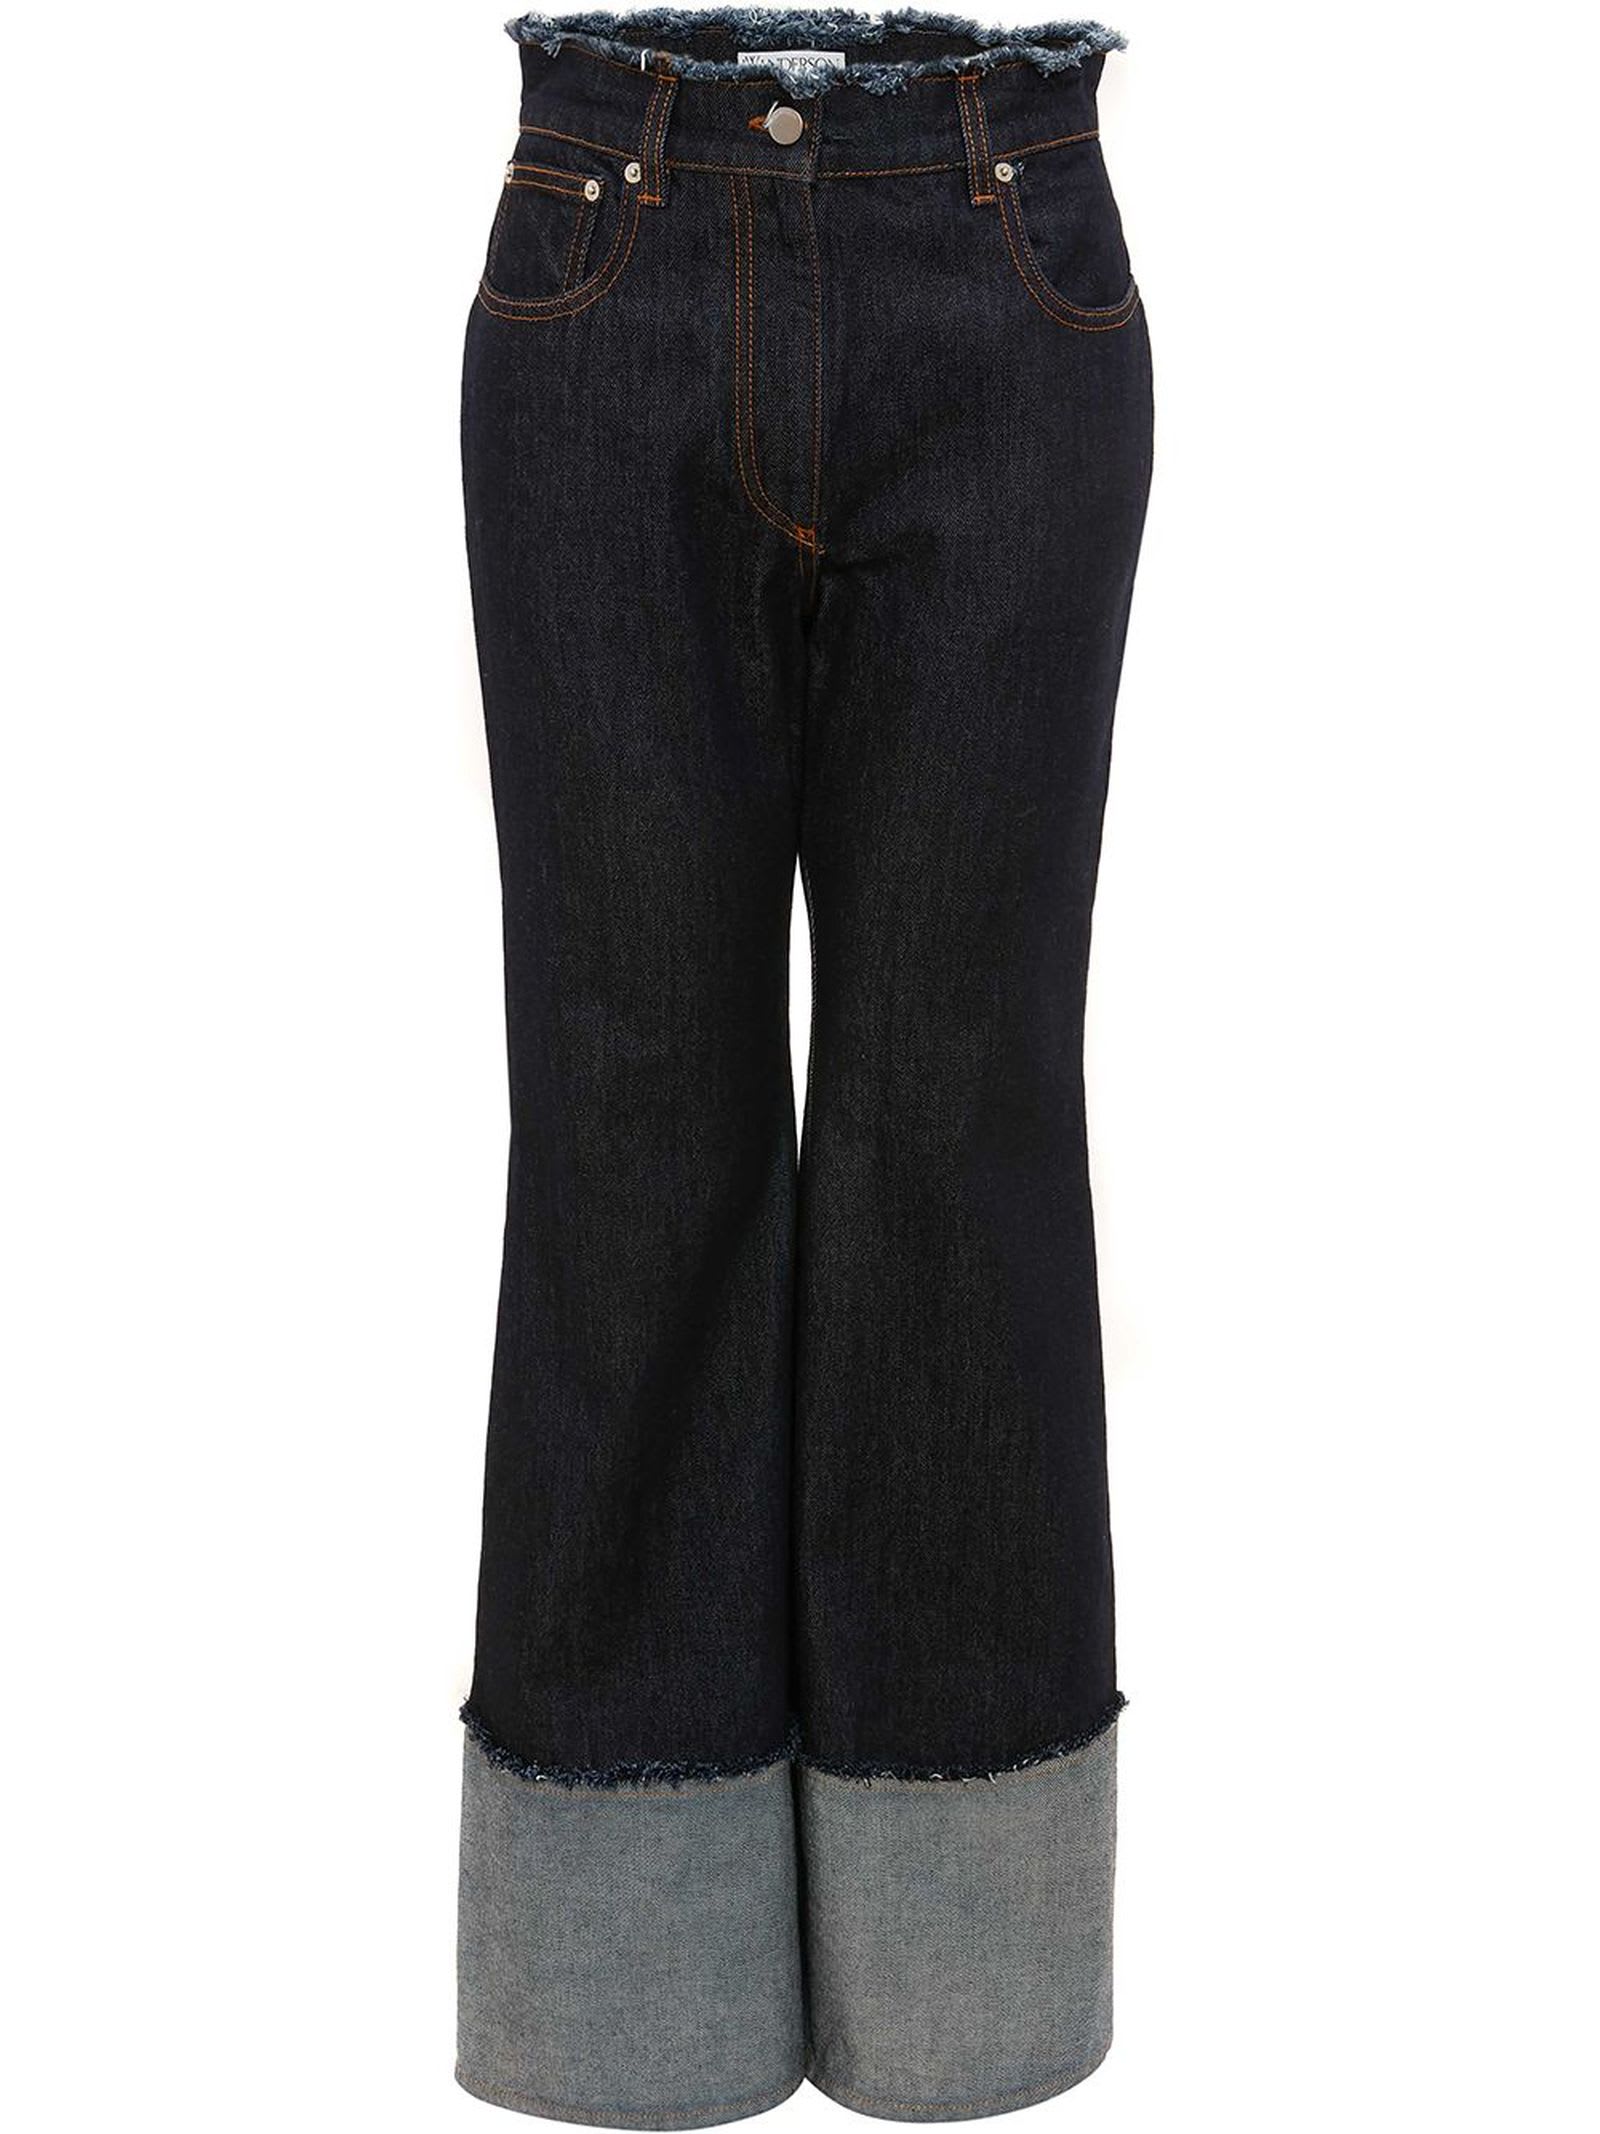 J.W. Anderson Indigo Blue Cotton Jeans